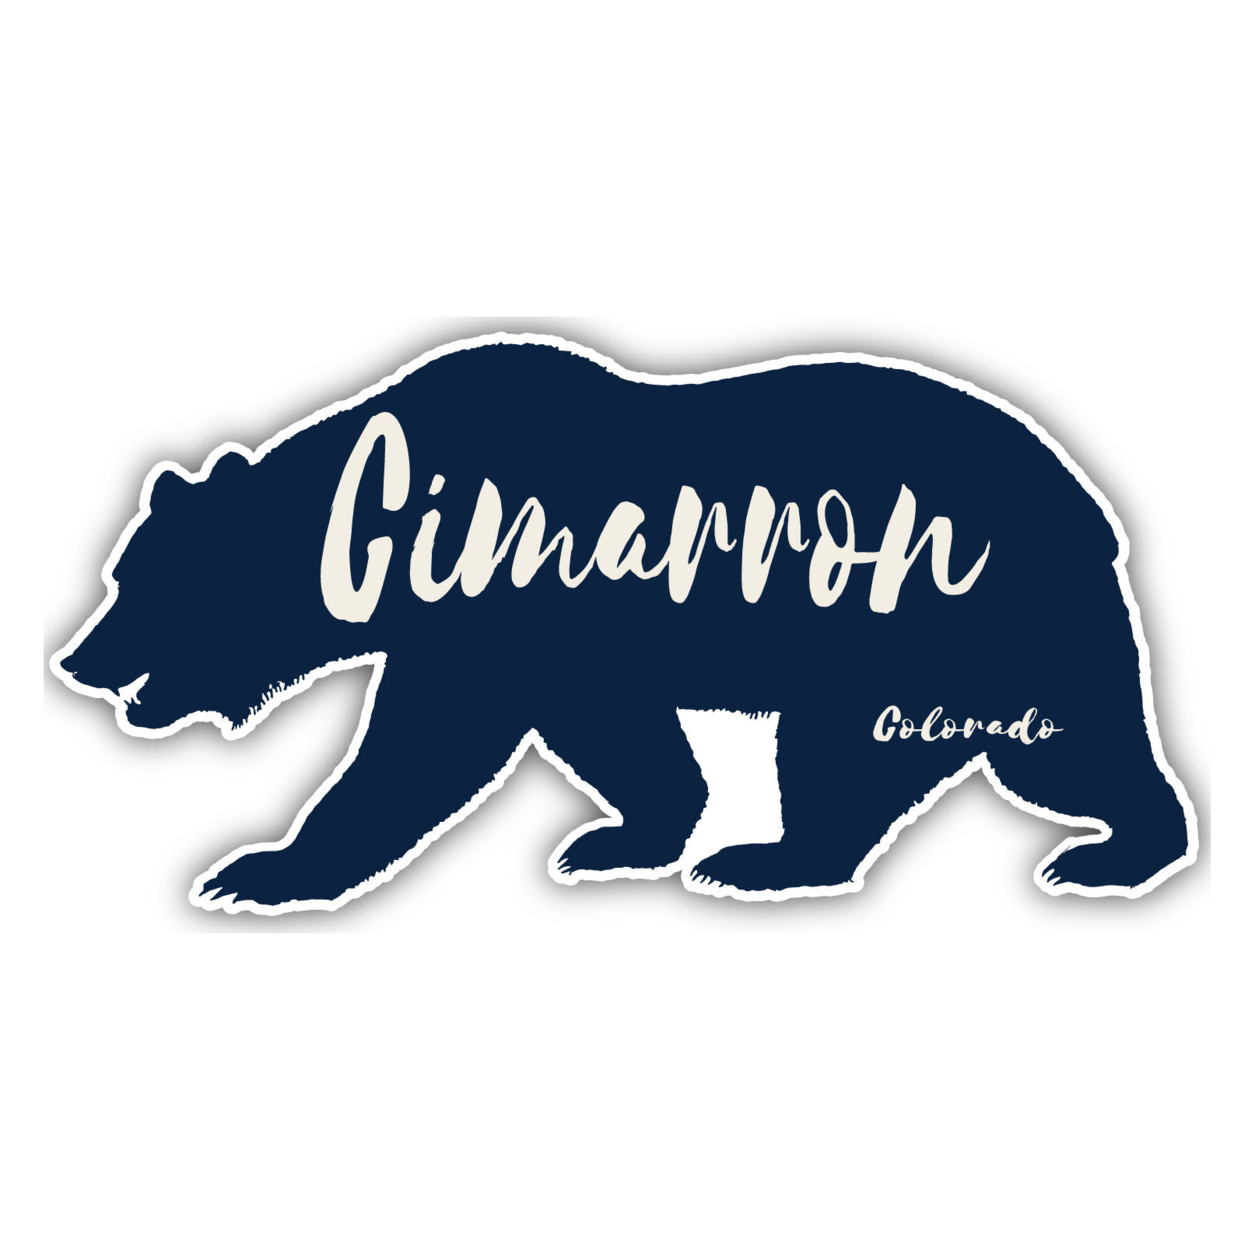 Cimarron Colorado Souvenir Decorative Stickers (Choose Theme And Size) - Single Unit, 6-Inch, Bear